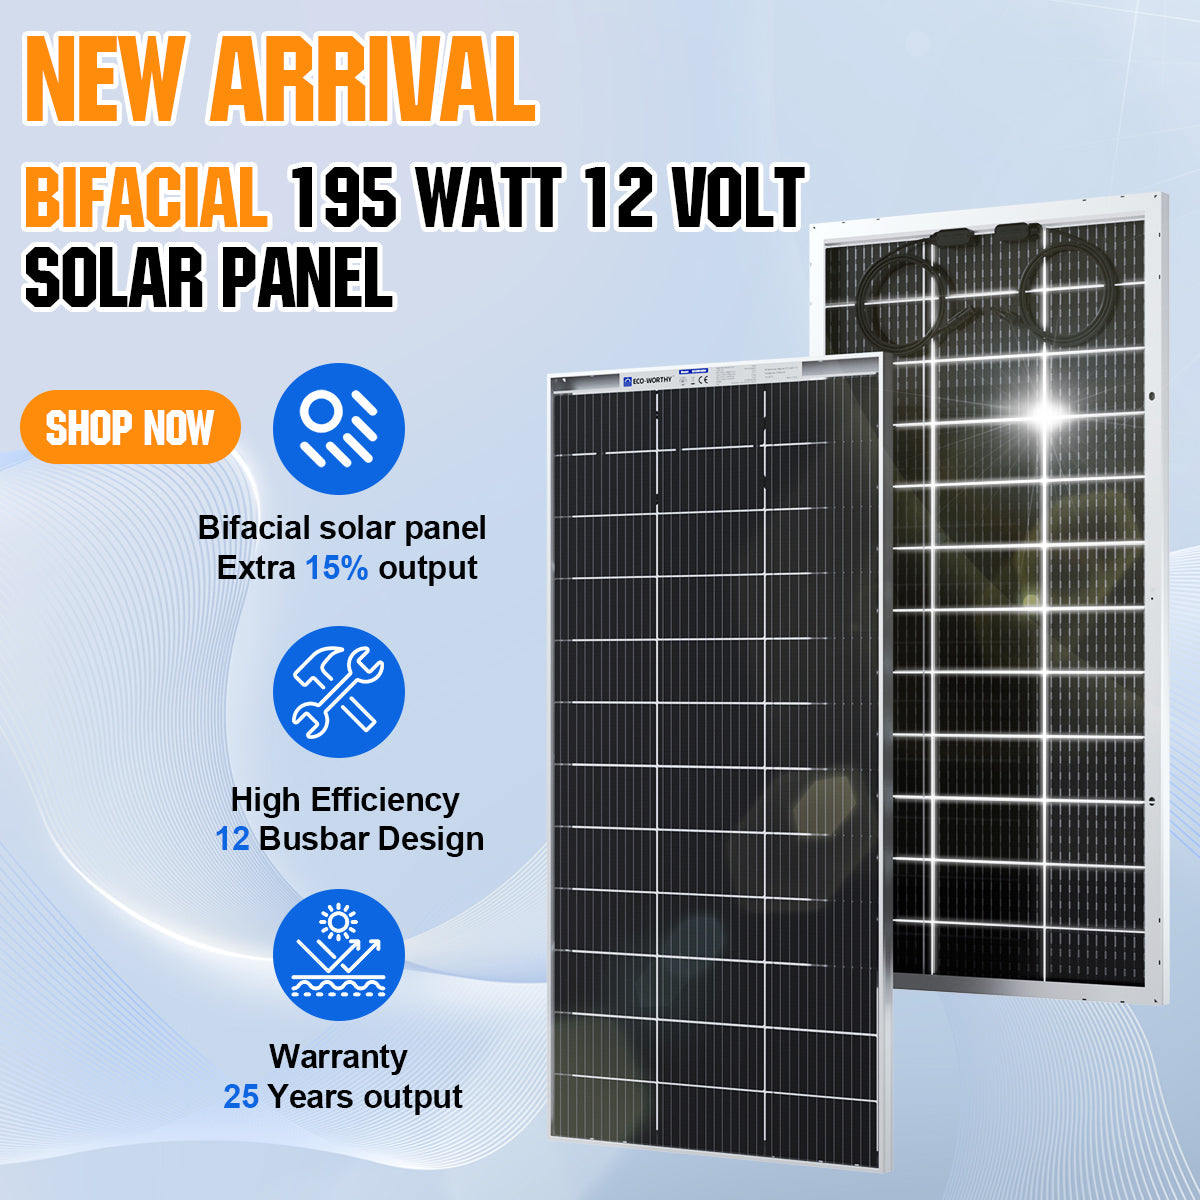 Eco-Worthy: Solar Panel Kits, Lithium Battery & DIY Solar Power